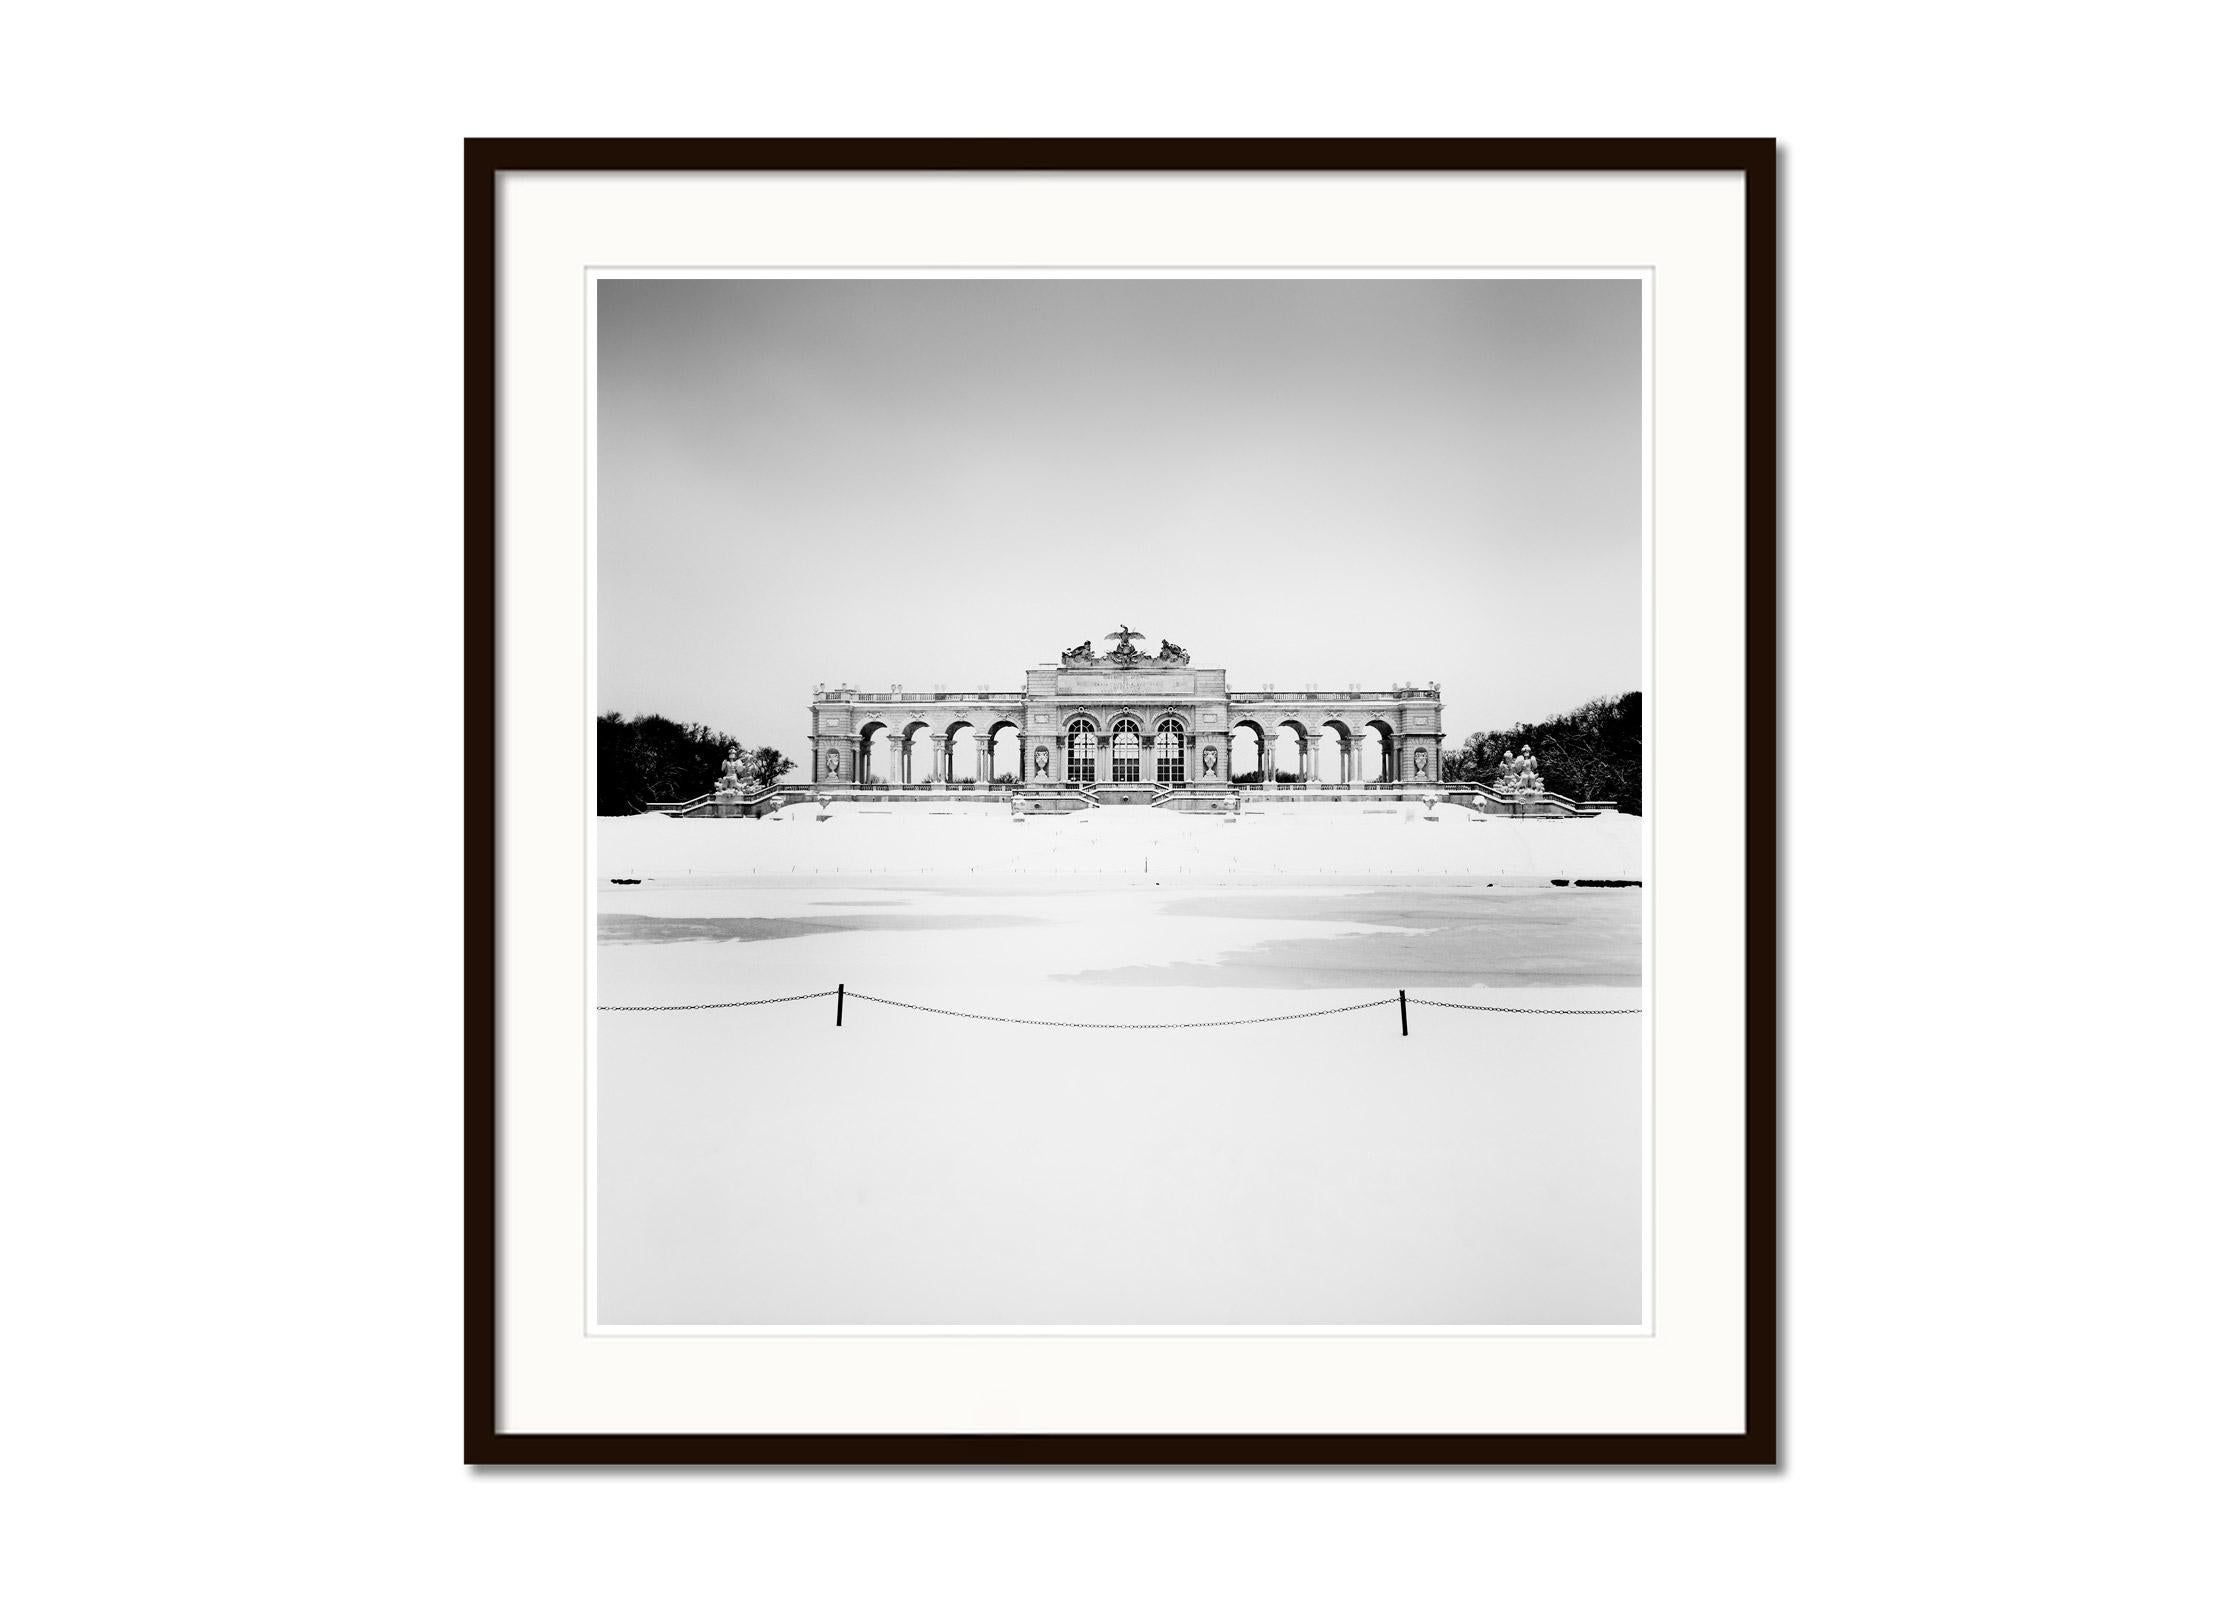 Gloriette Winter, Schloss Schoenbrunn, Vienna, B&W cityscape photography print - Gray Black and White Photograph by Gerald Berghammer